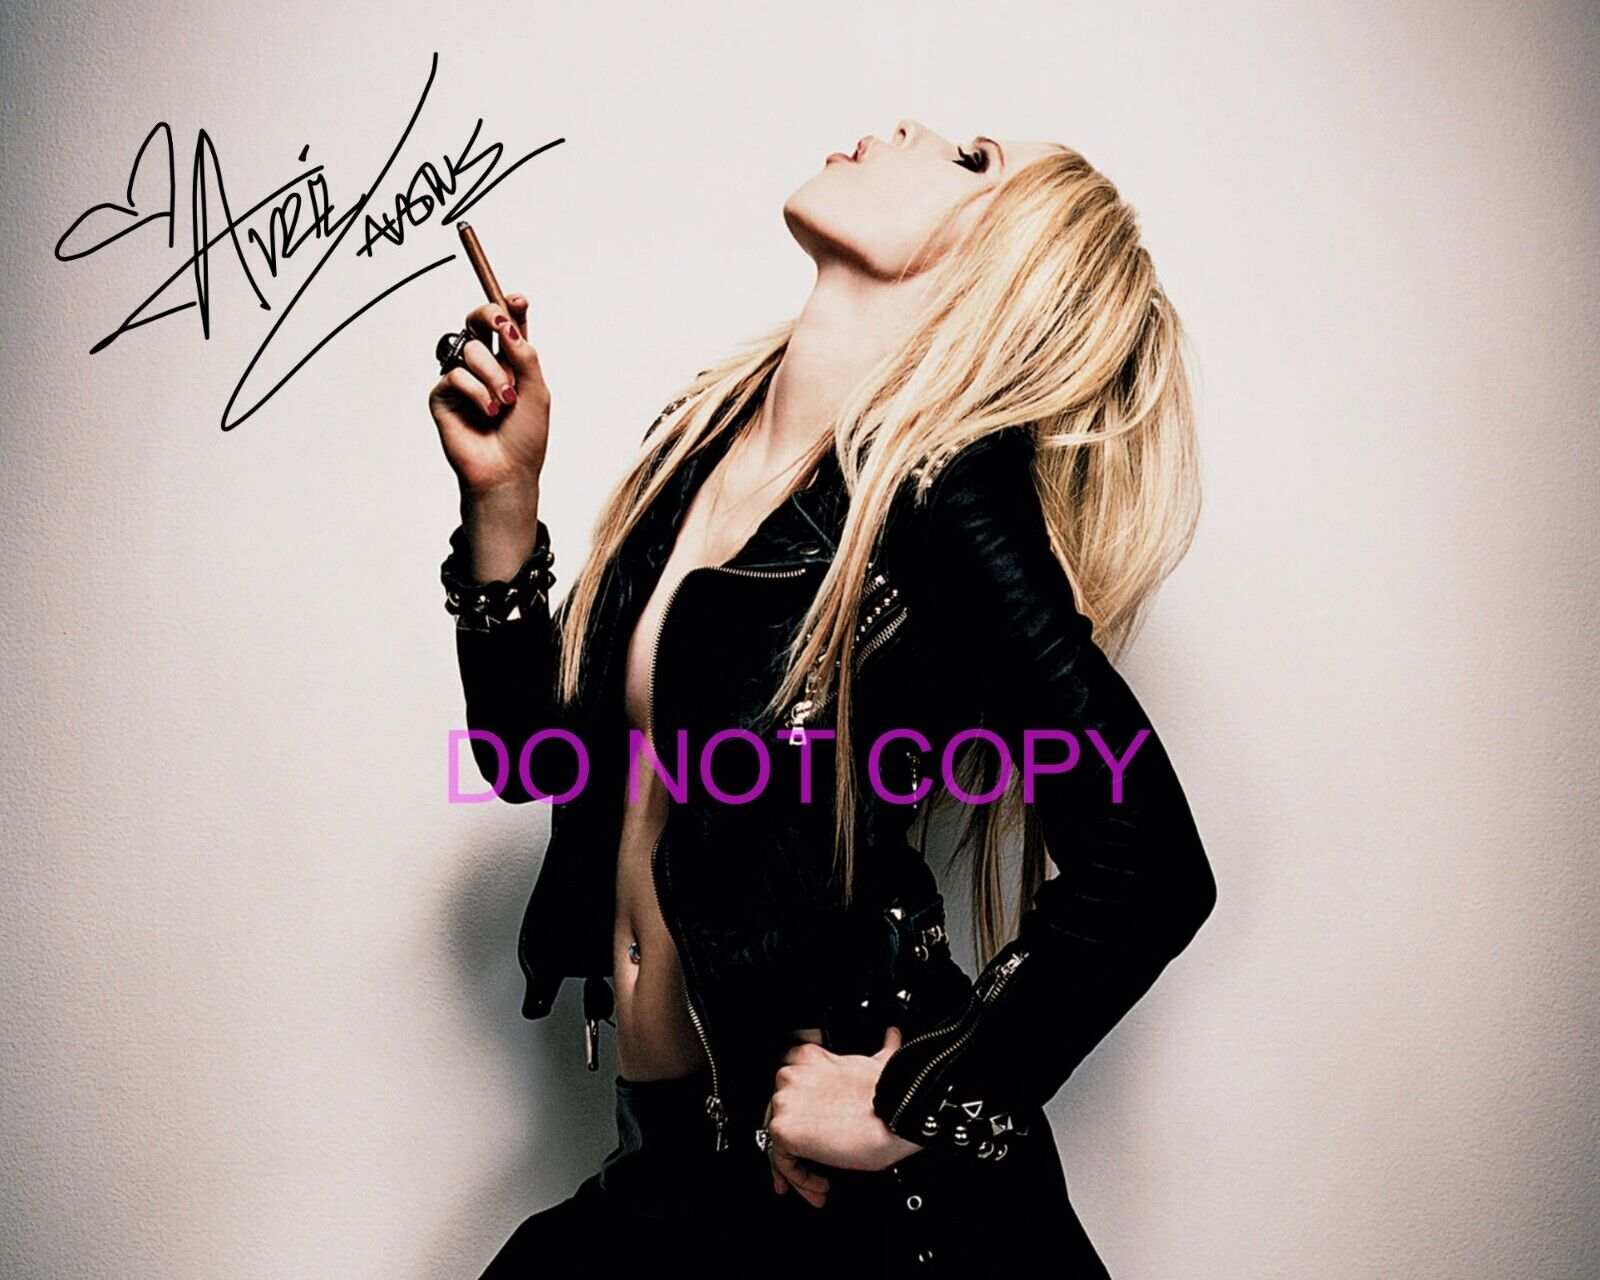 Avril Lavigne Signed 11x14 Reprint Poster Skater Boy Pop Punk #2